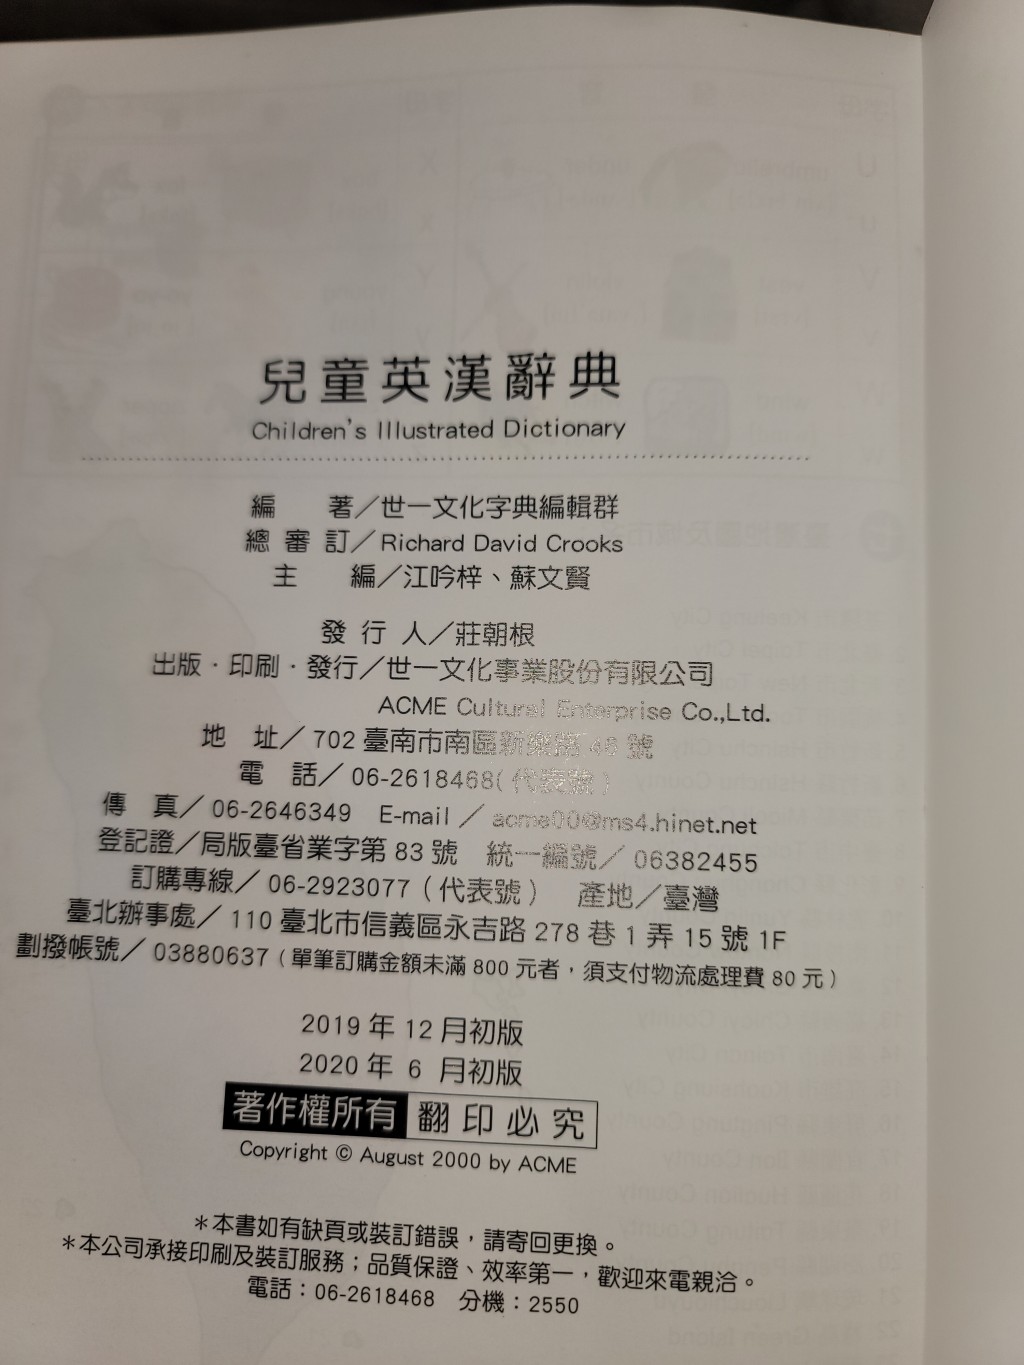 Taiwanese 'Hello Kitty' English-Chinese dictionary has 70 'egregious errors'